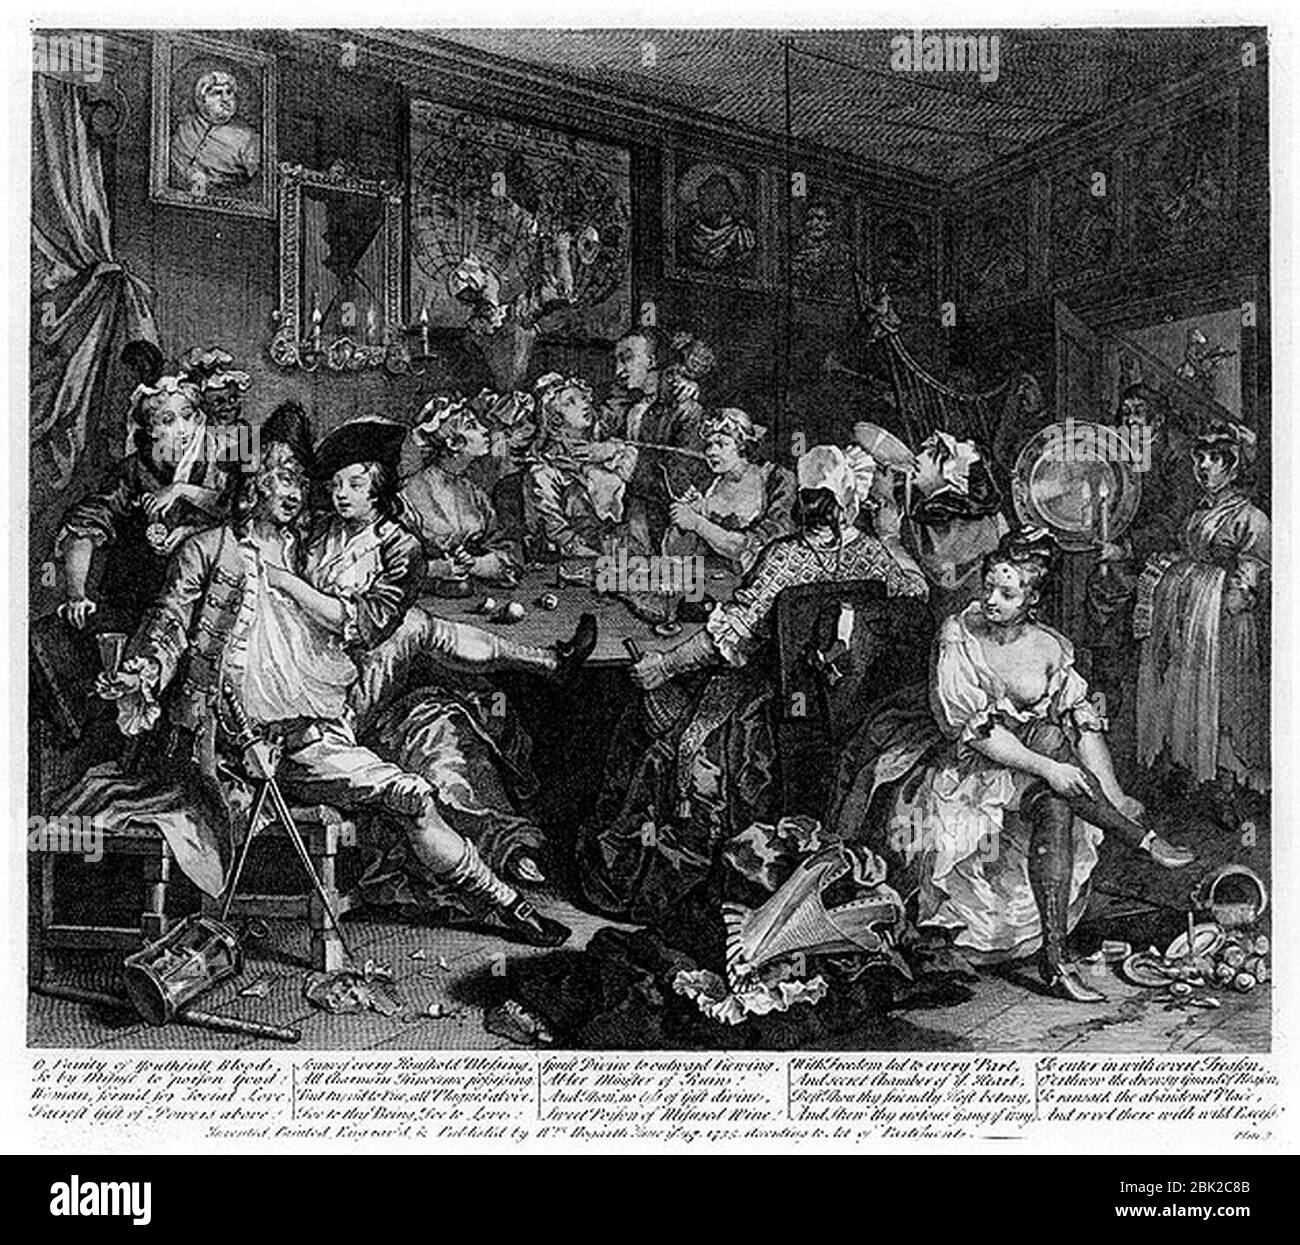 William Hogarth - A Rake's Progress - Plate 3 - The Tavern Scene. Stock Photo